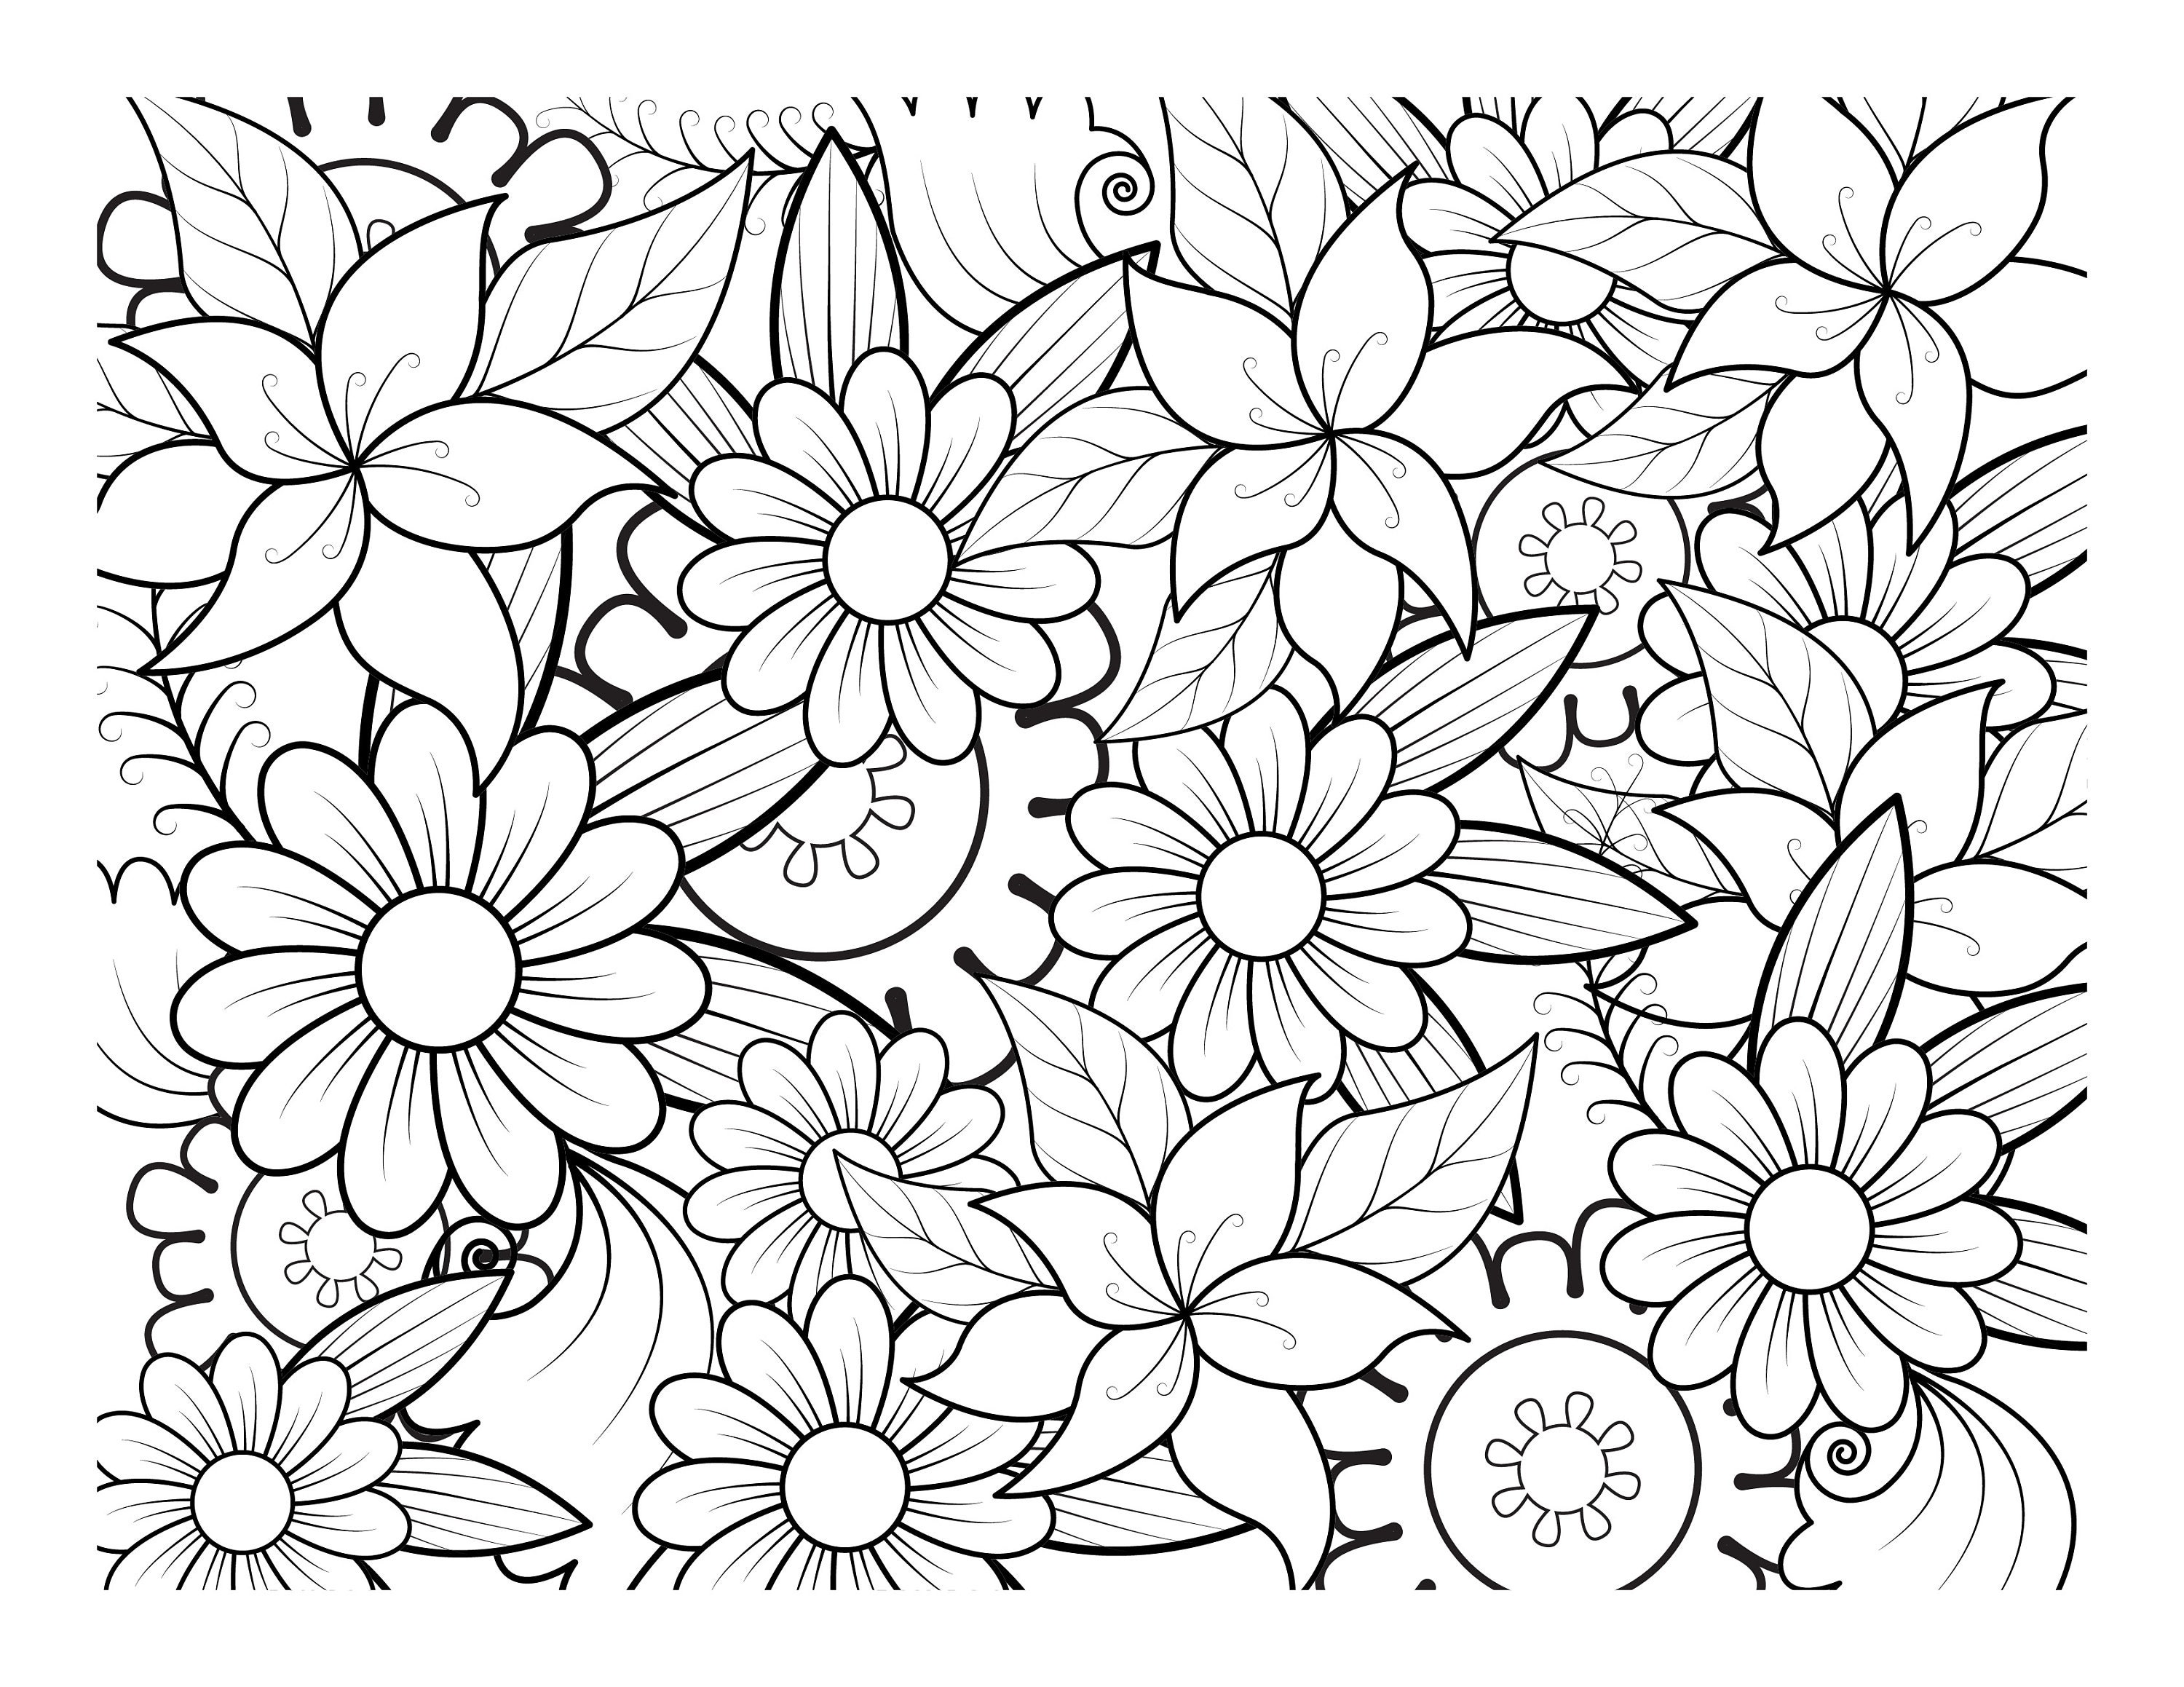 Premium Vector  Floral coloring book floral coloring book for adults  floral coloring page coloring pages books